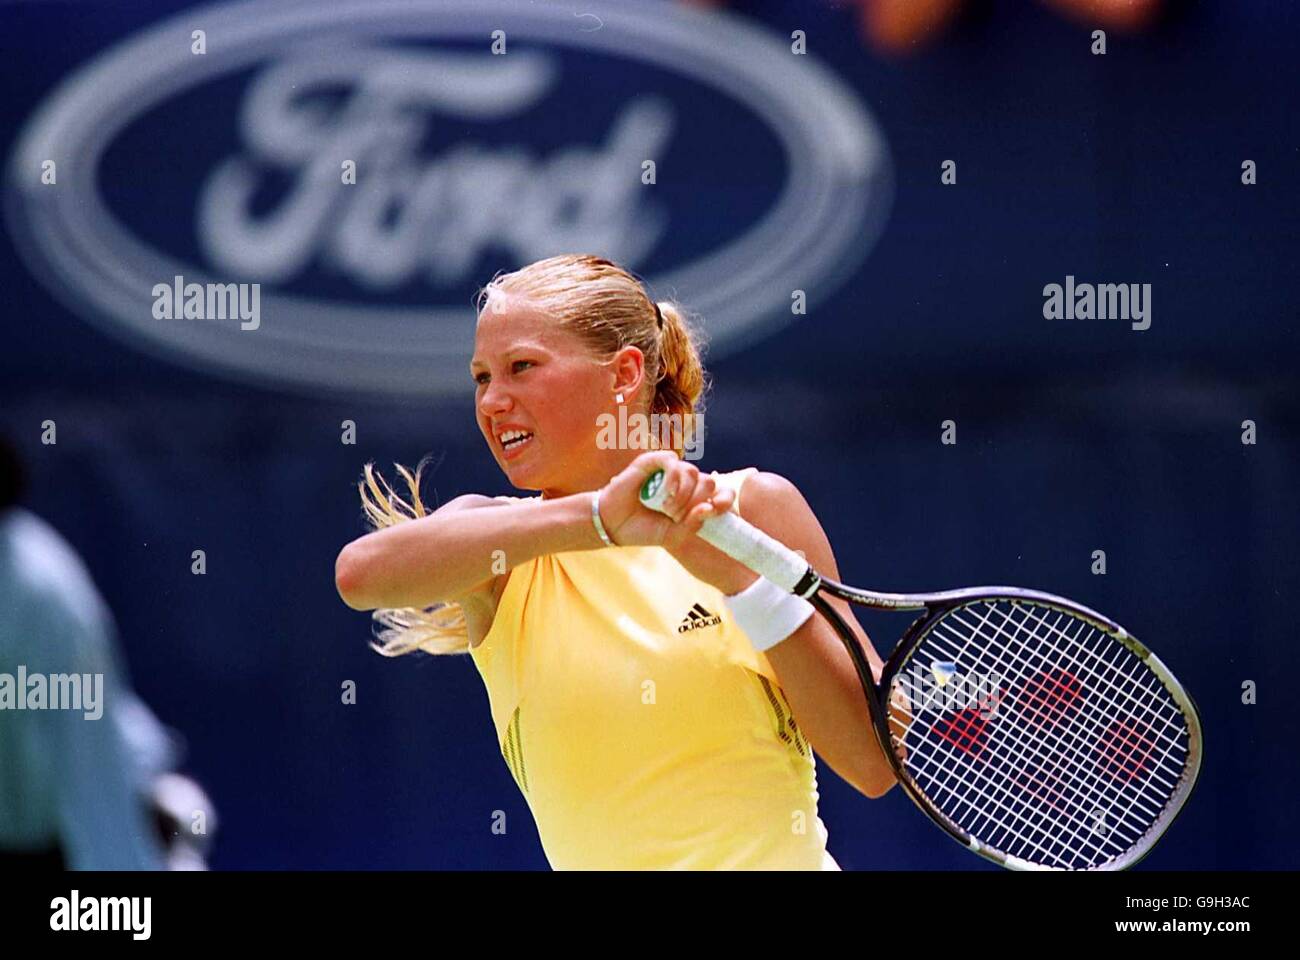 Tennis - Australian Open -Melbourne - 3rd Round Stock Photo - Alamy